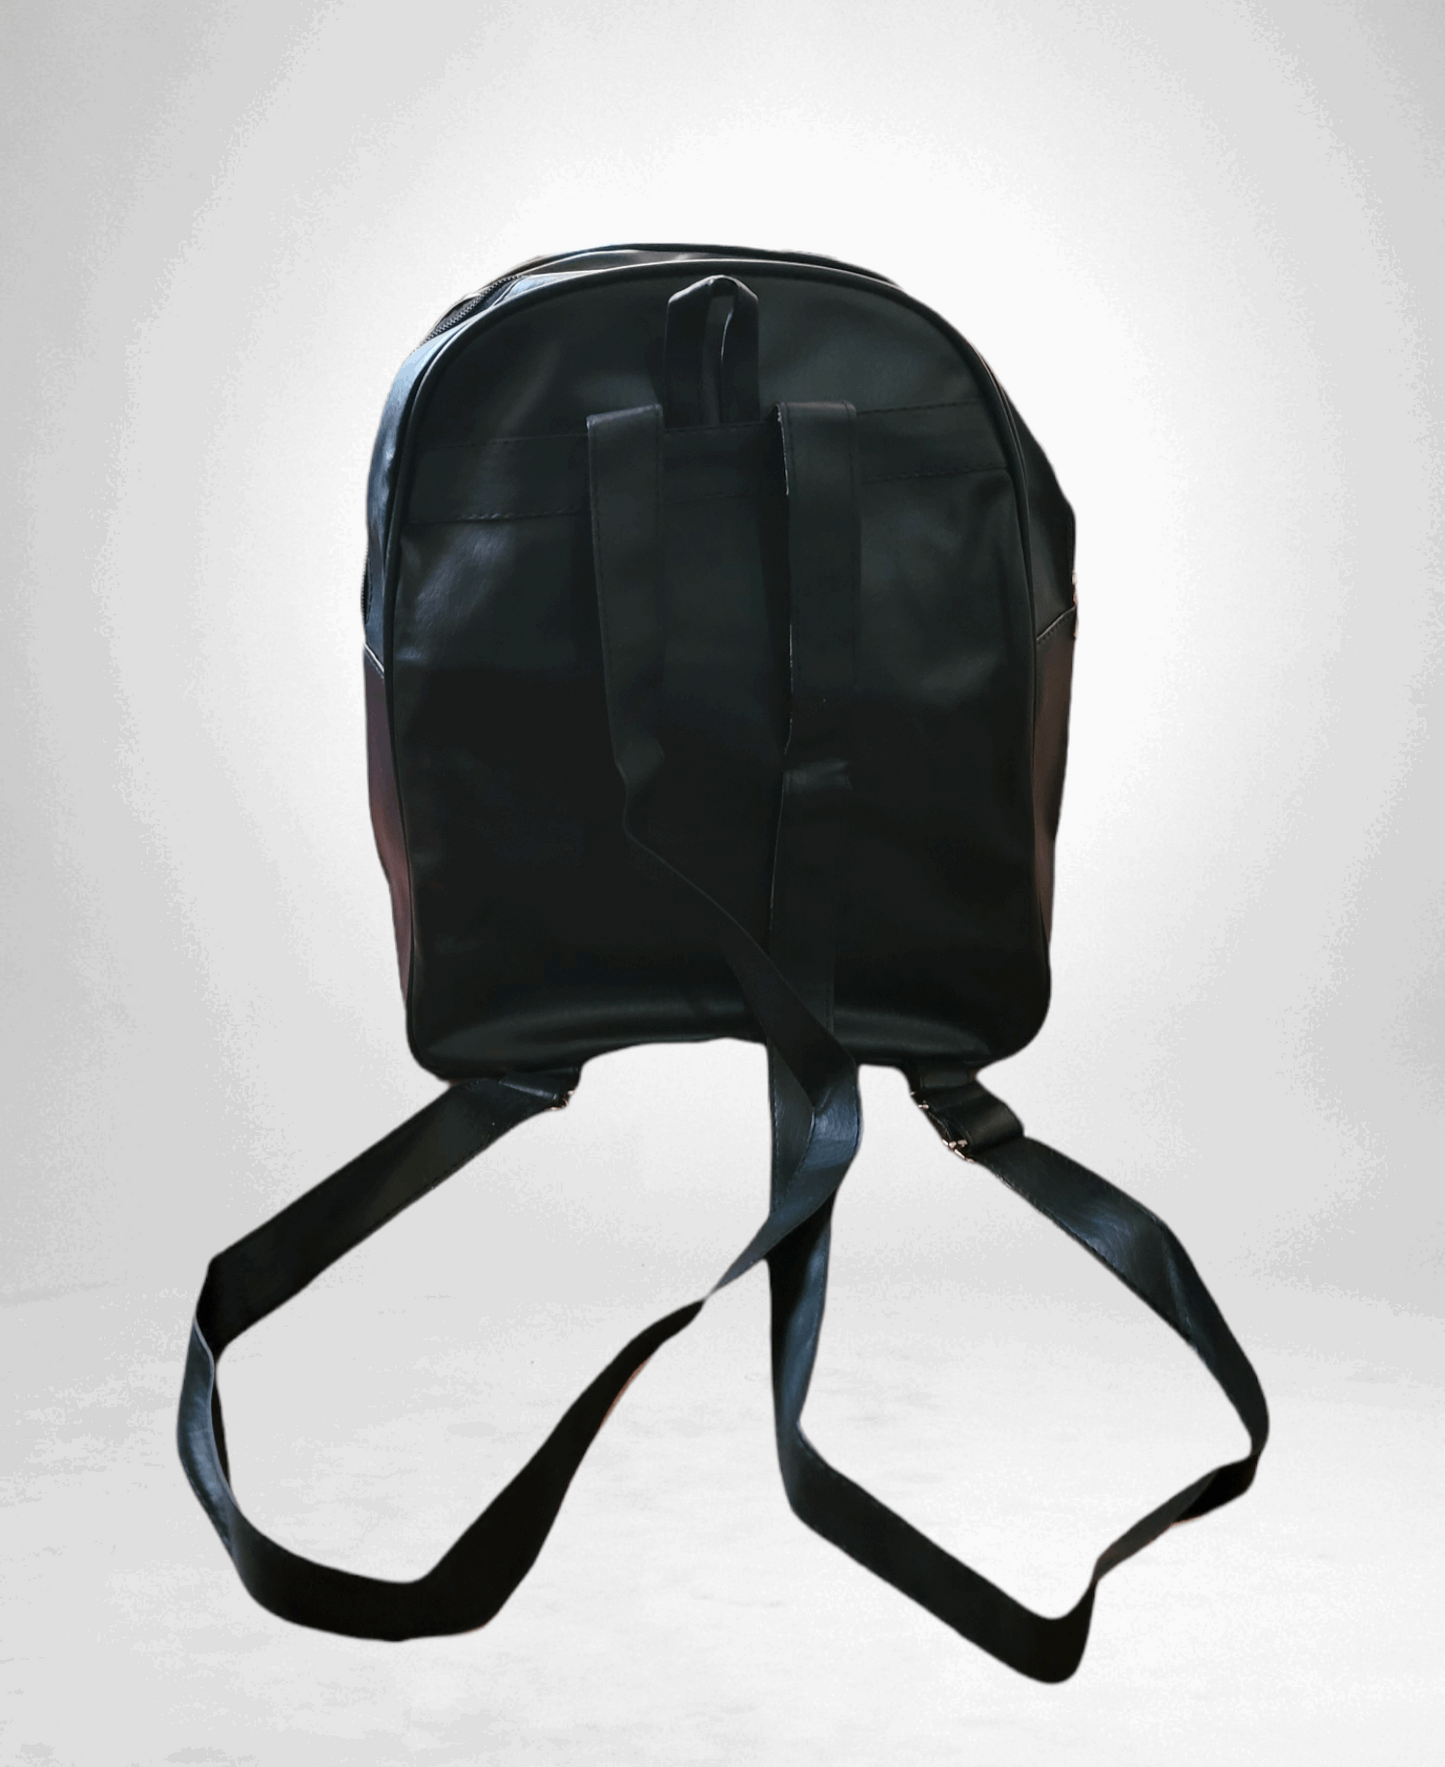 Niqabi Backpack - Rumaysa Fashionz 